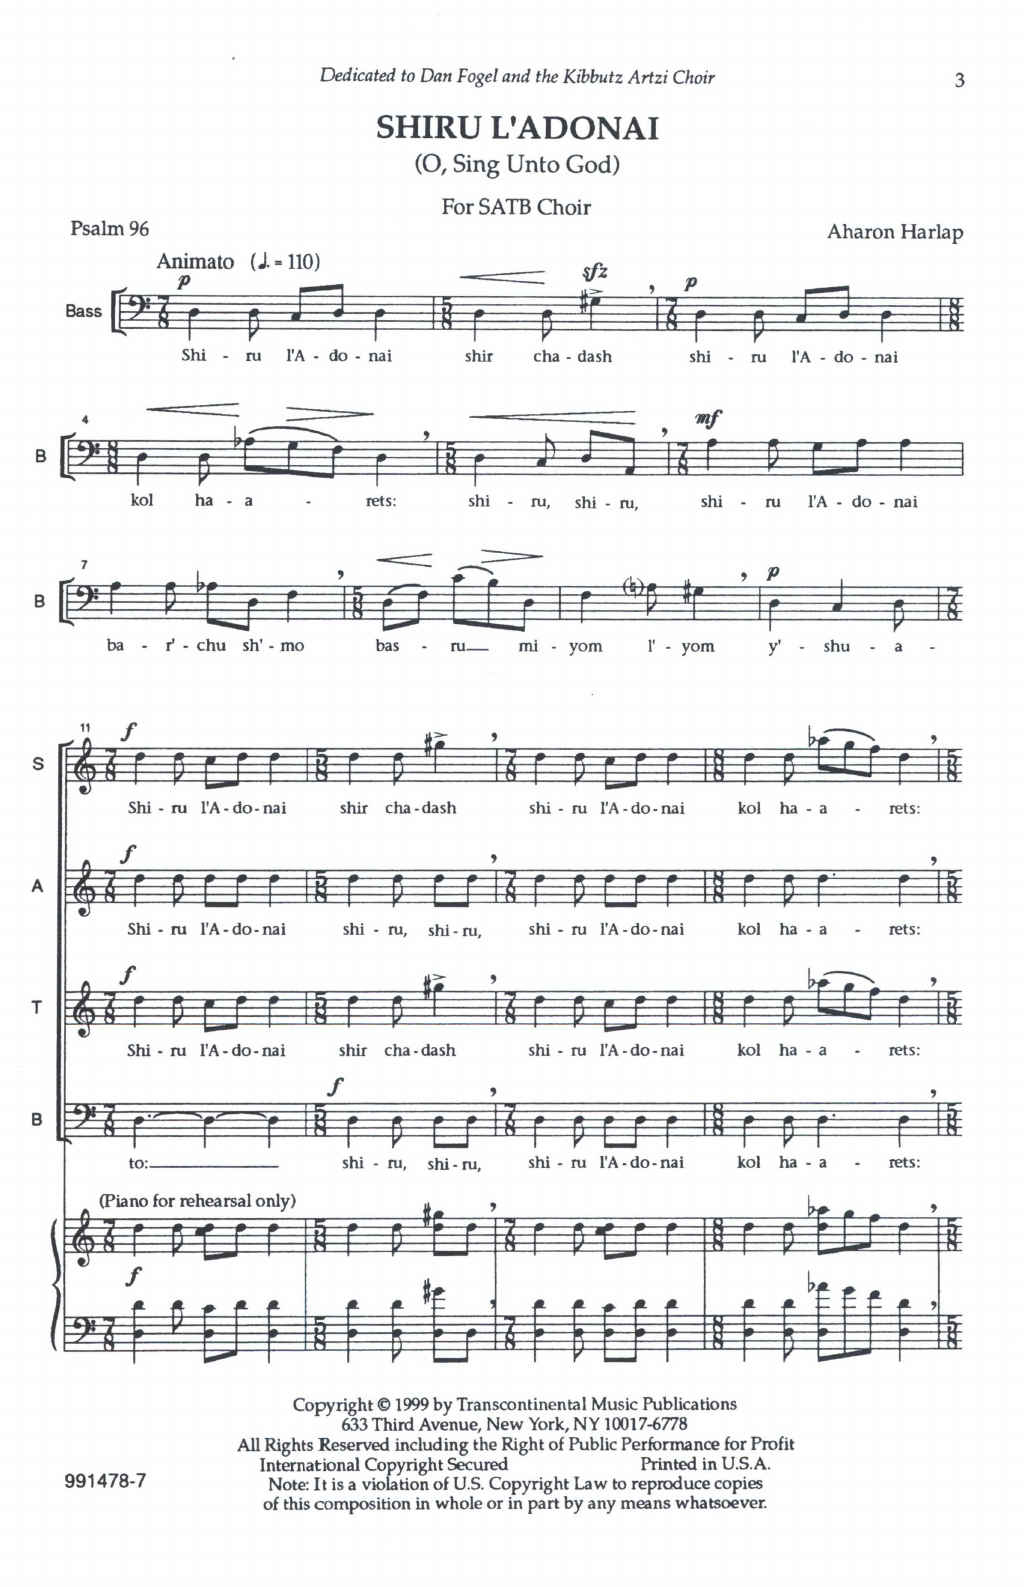 Aahron Harlap Shiru L'adonai (O Sing Unto God) Sheet Music Notes & Chords for SATB Choir - Download or Print PDF